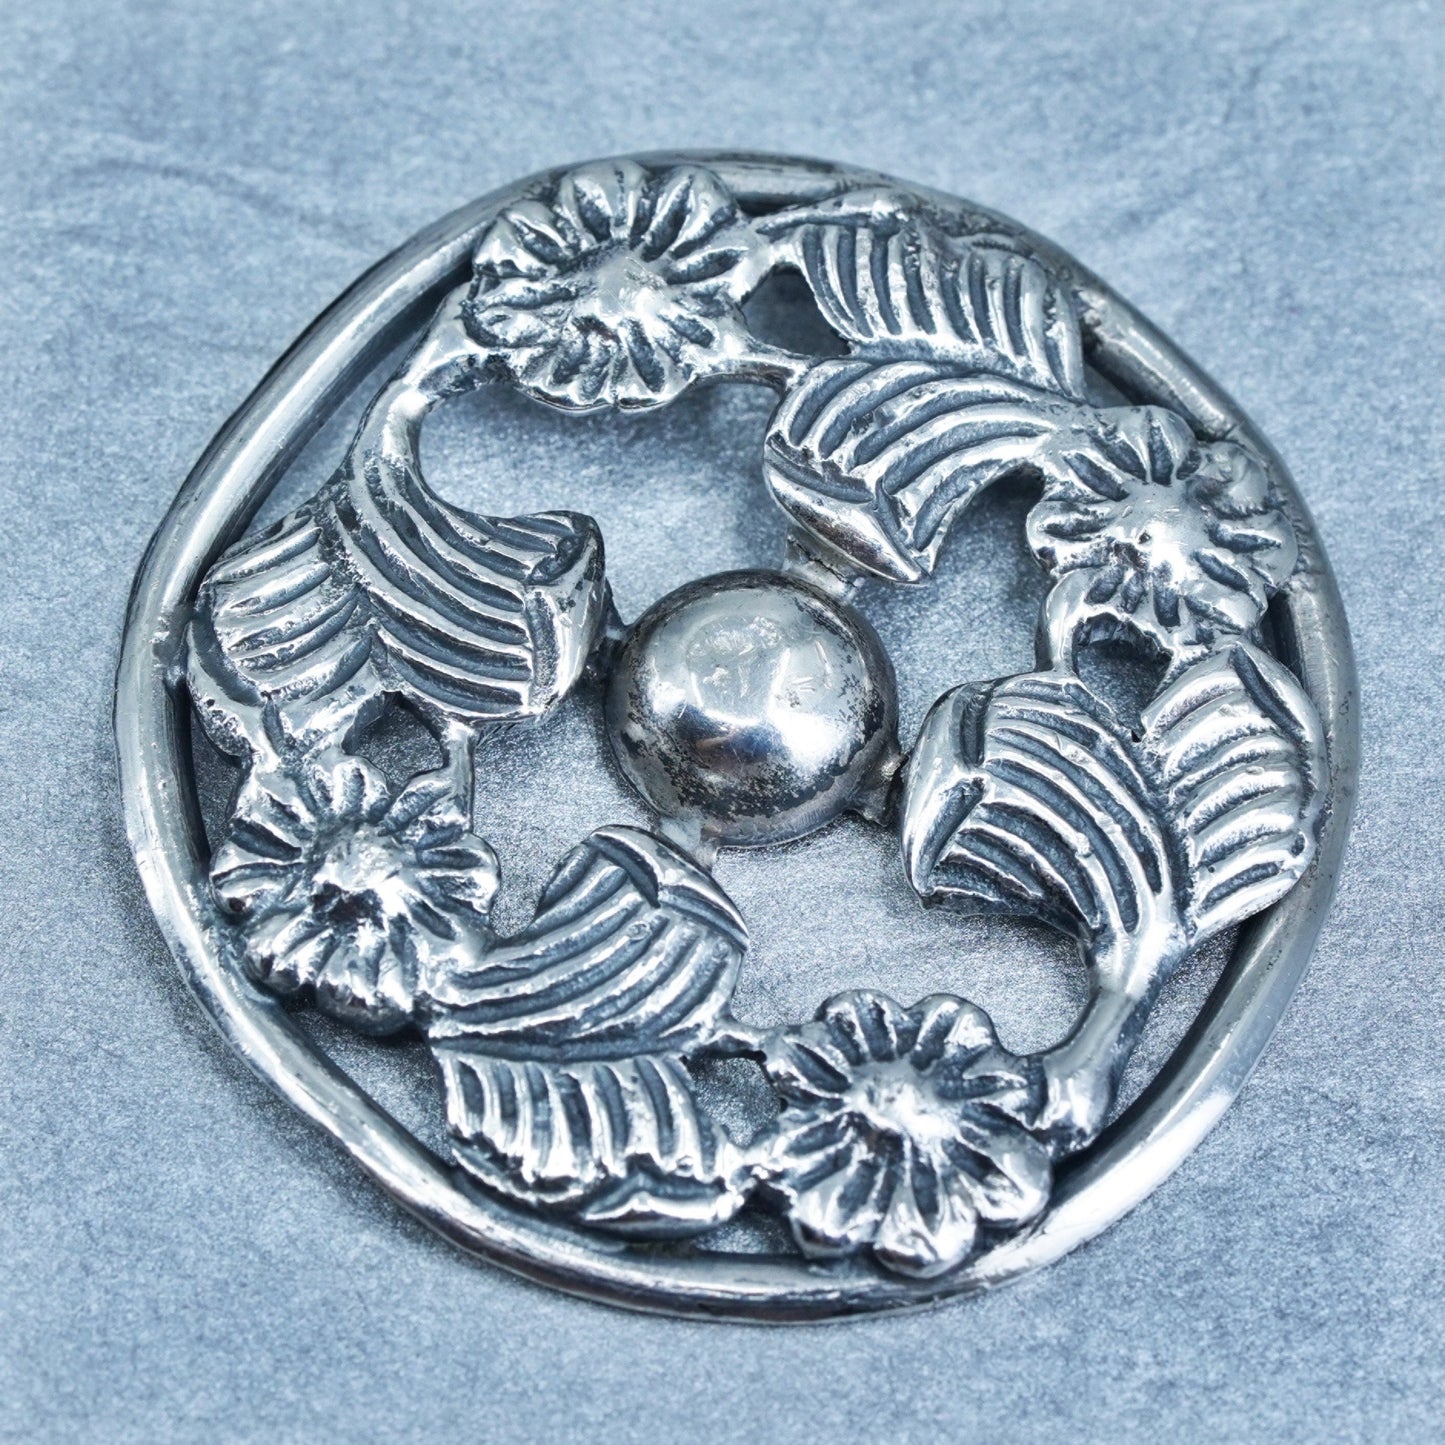 Antique silver tone handmade charm, 925 cross pendant